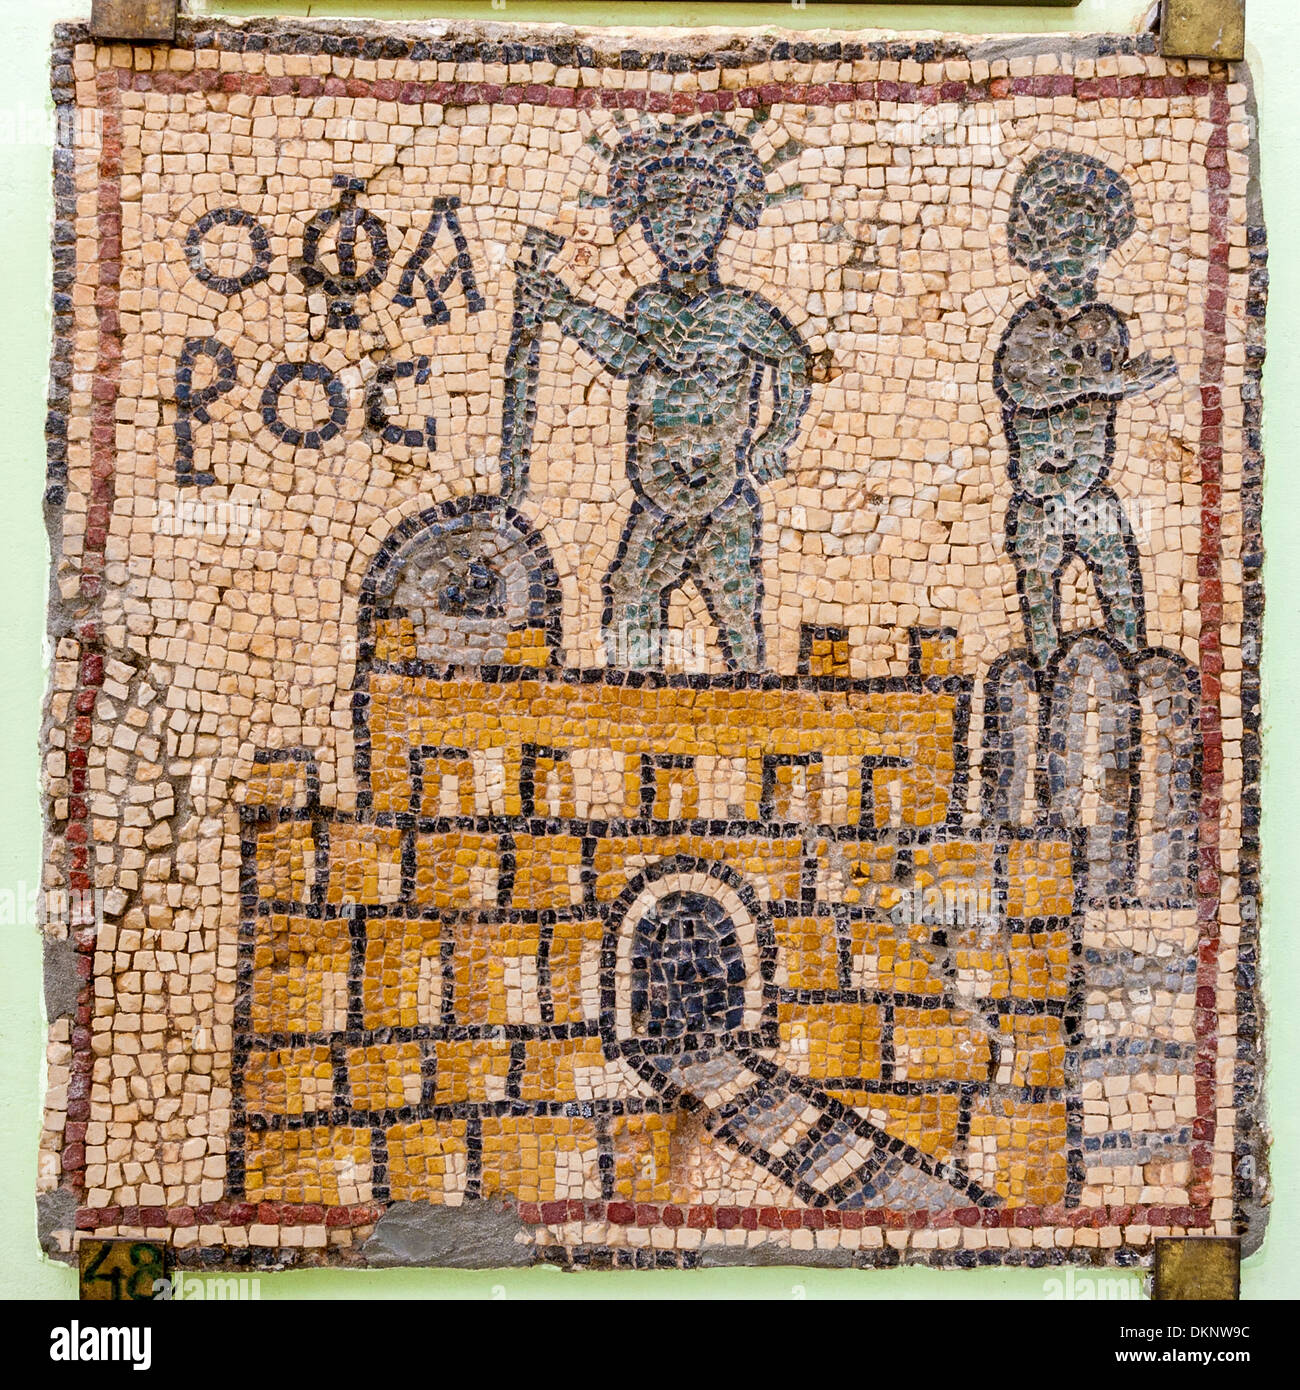 Libya, Qasr Libya.  Byzantine Mosaic from the mid-6th Century A.D. Depicting the Lighthouse (Pharos) of Alexandria. Stock Photo